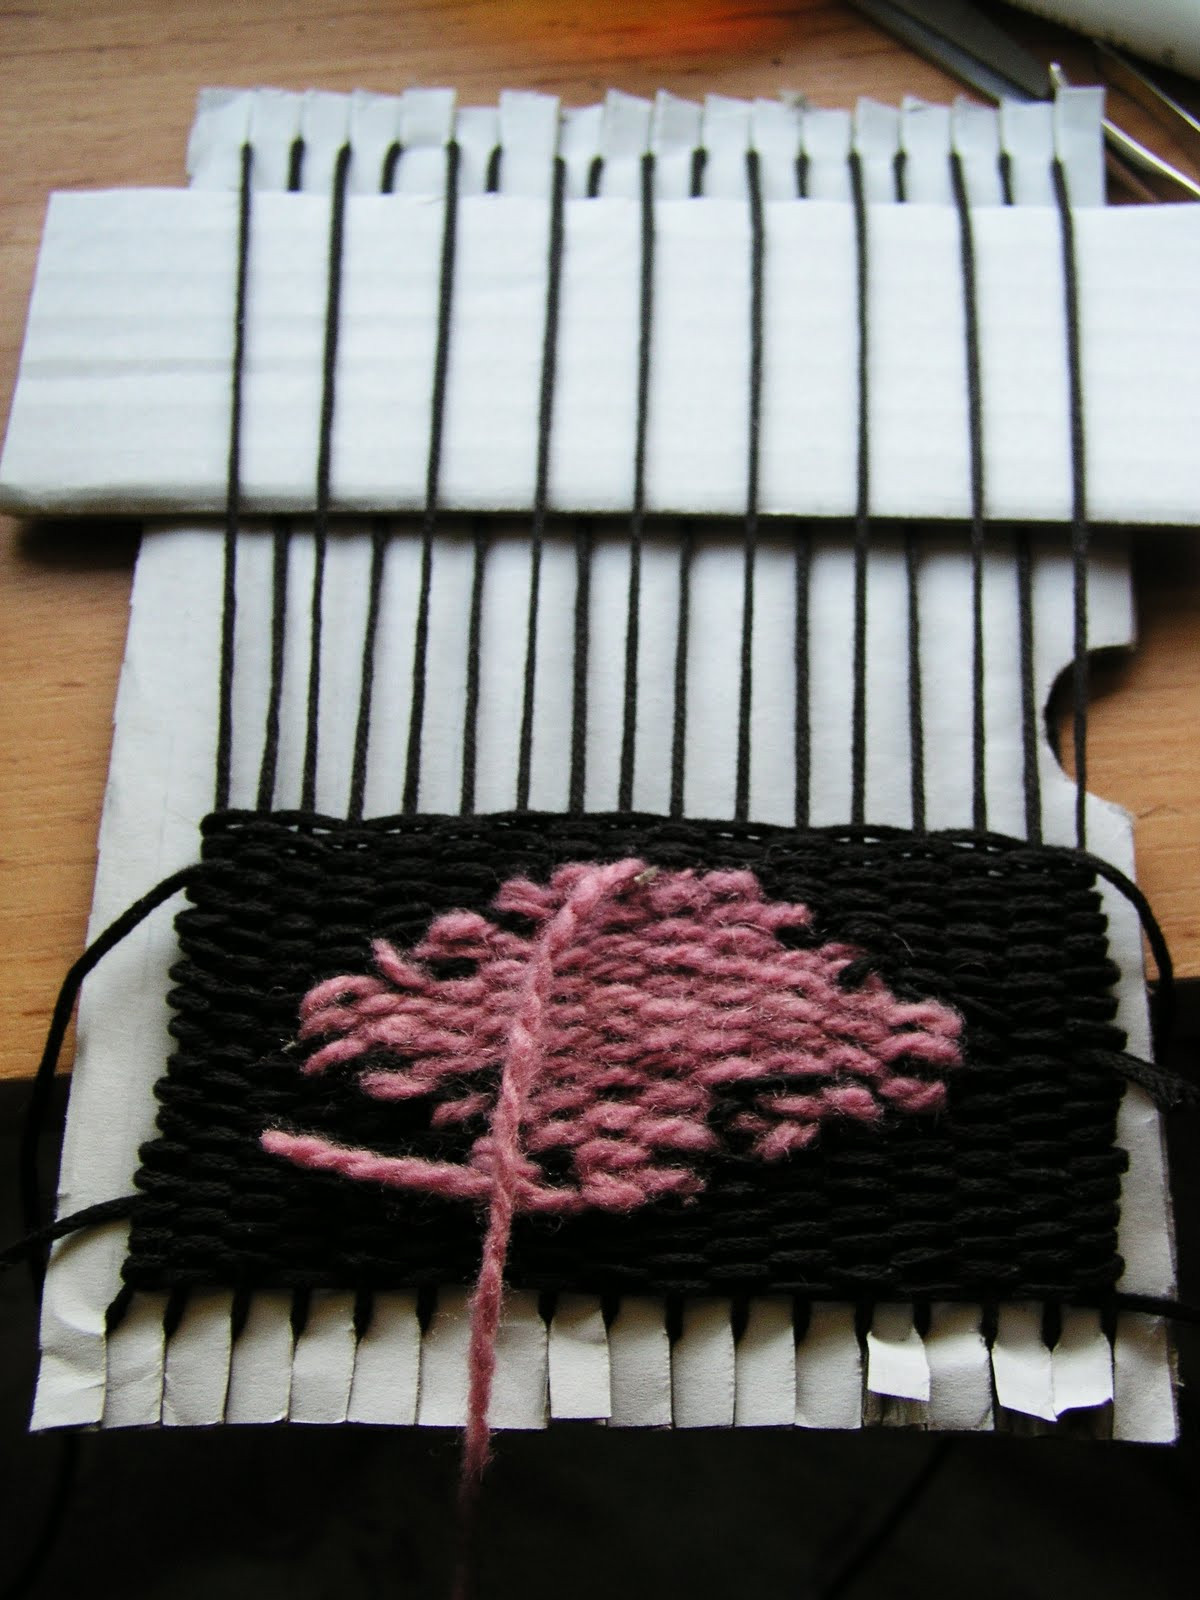 Best ideas about DIY Weaving Loom
. Save or Pin diy weaving tutorial Now.